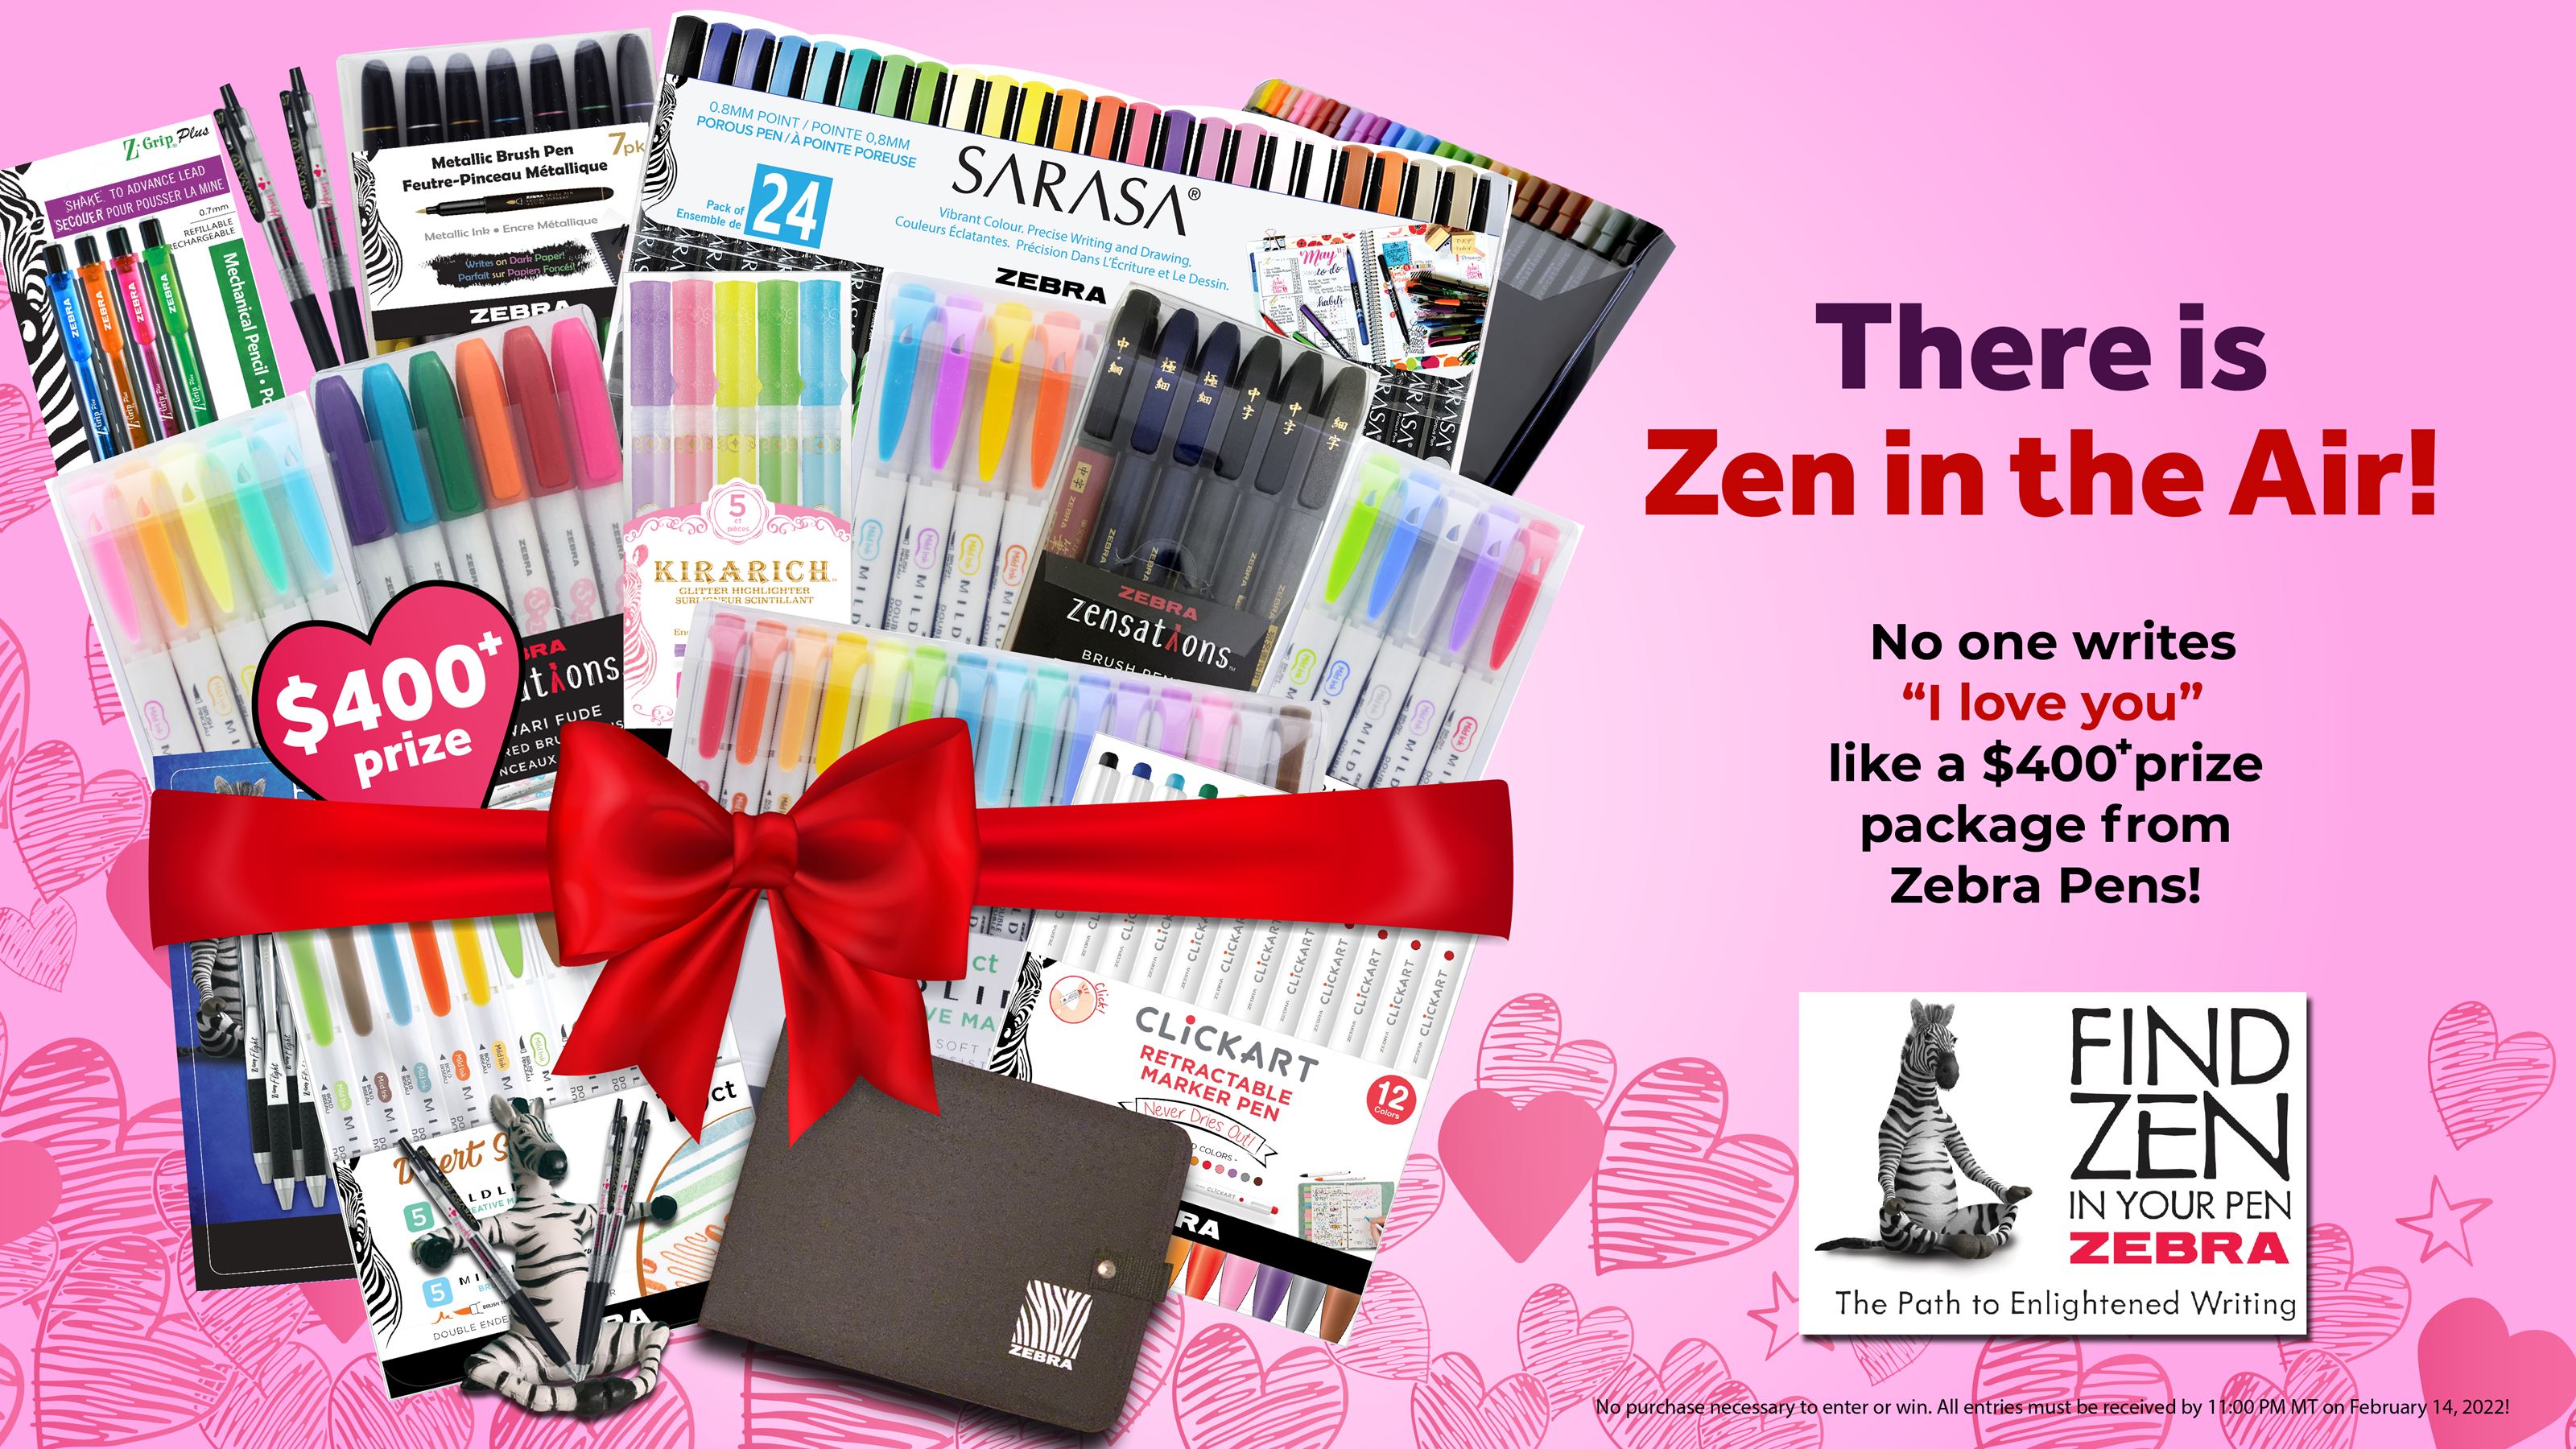 Zebra Funwari Brush Pen Set 6/Pkg Assorted Colors